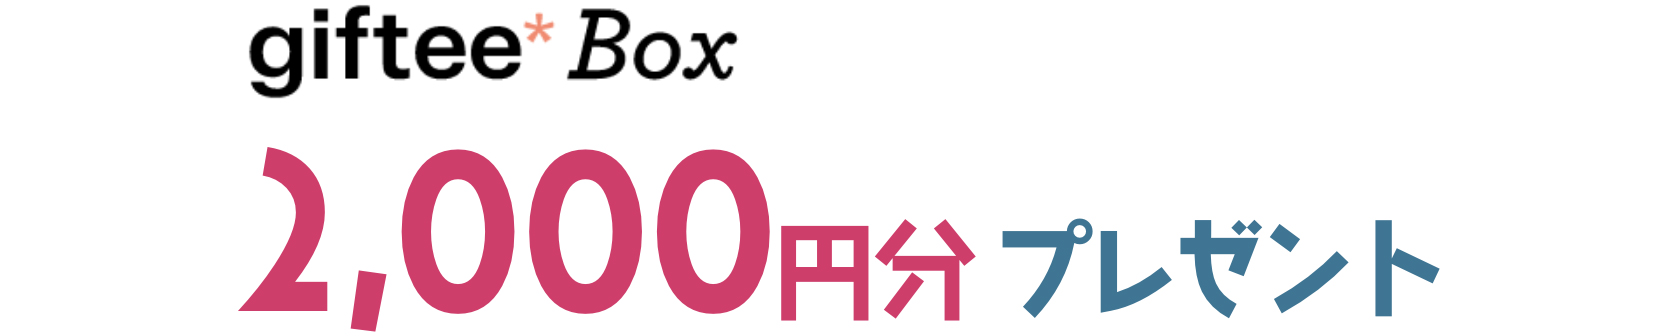 giftee Box 2,000円分プレゼント